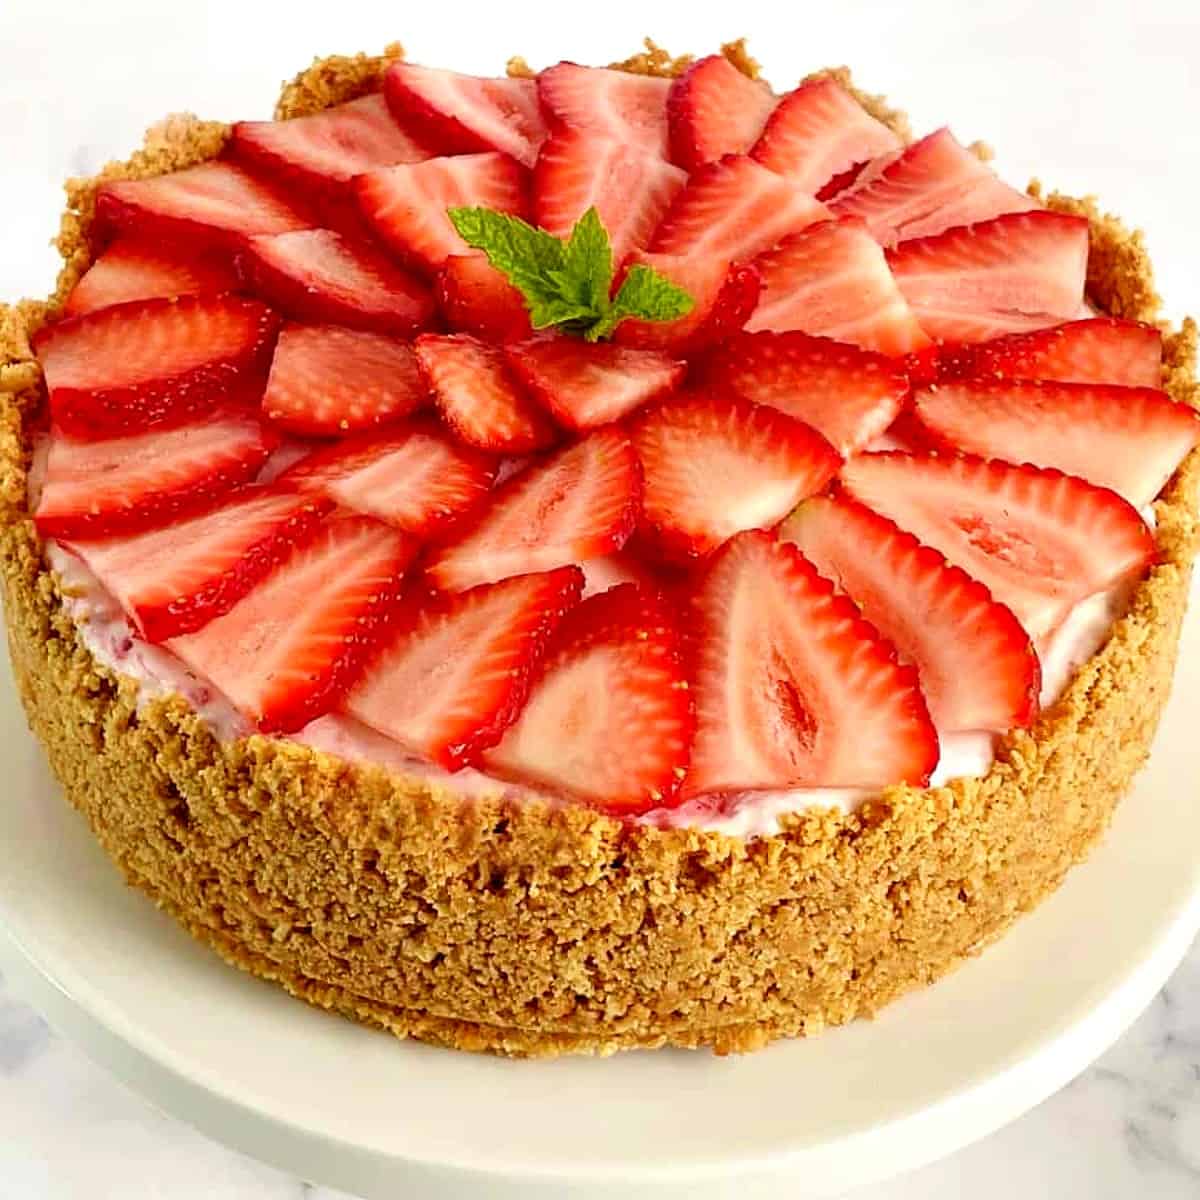 strawberry-ice-cream-cheesecake-pie-with-sliced-fresh-strawberries-on-top